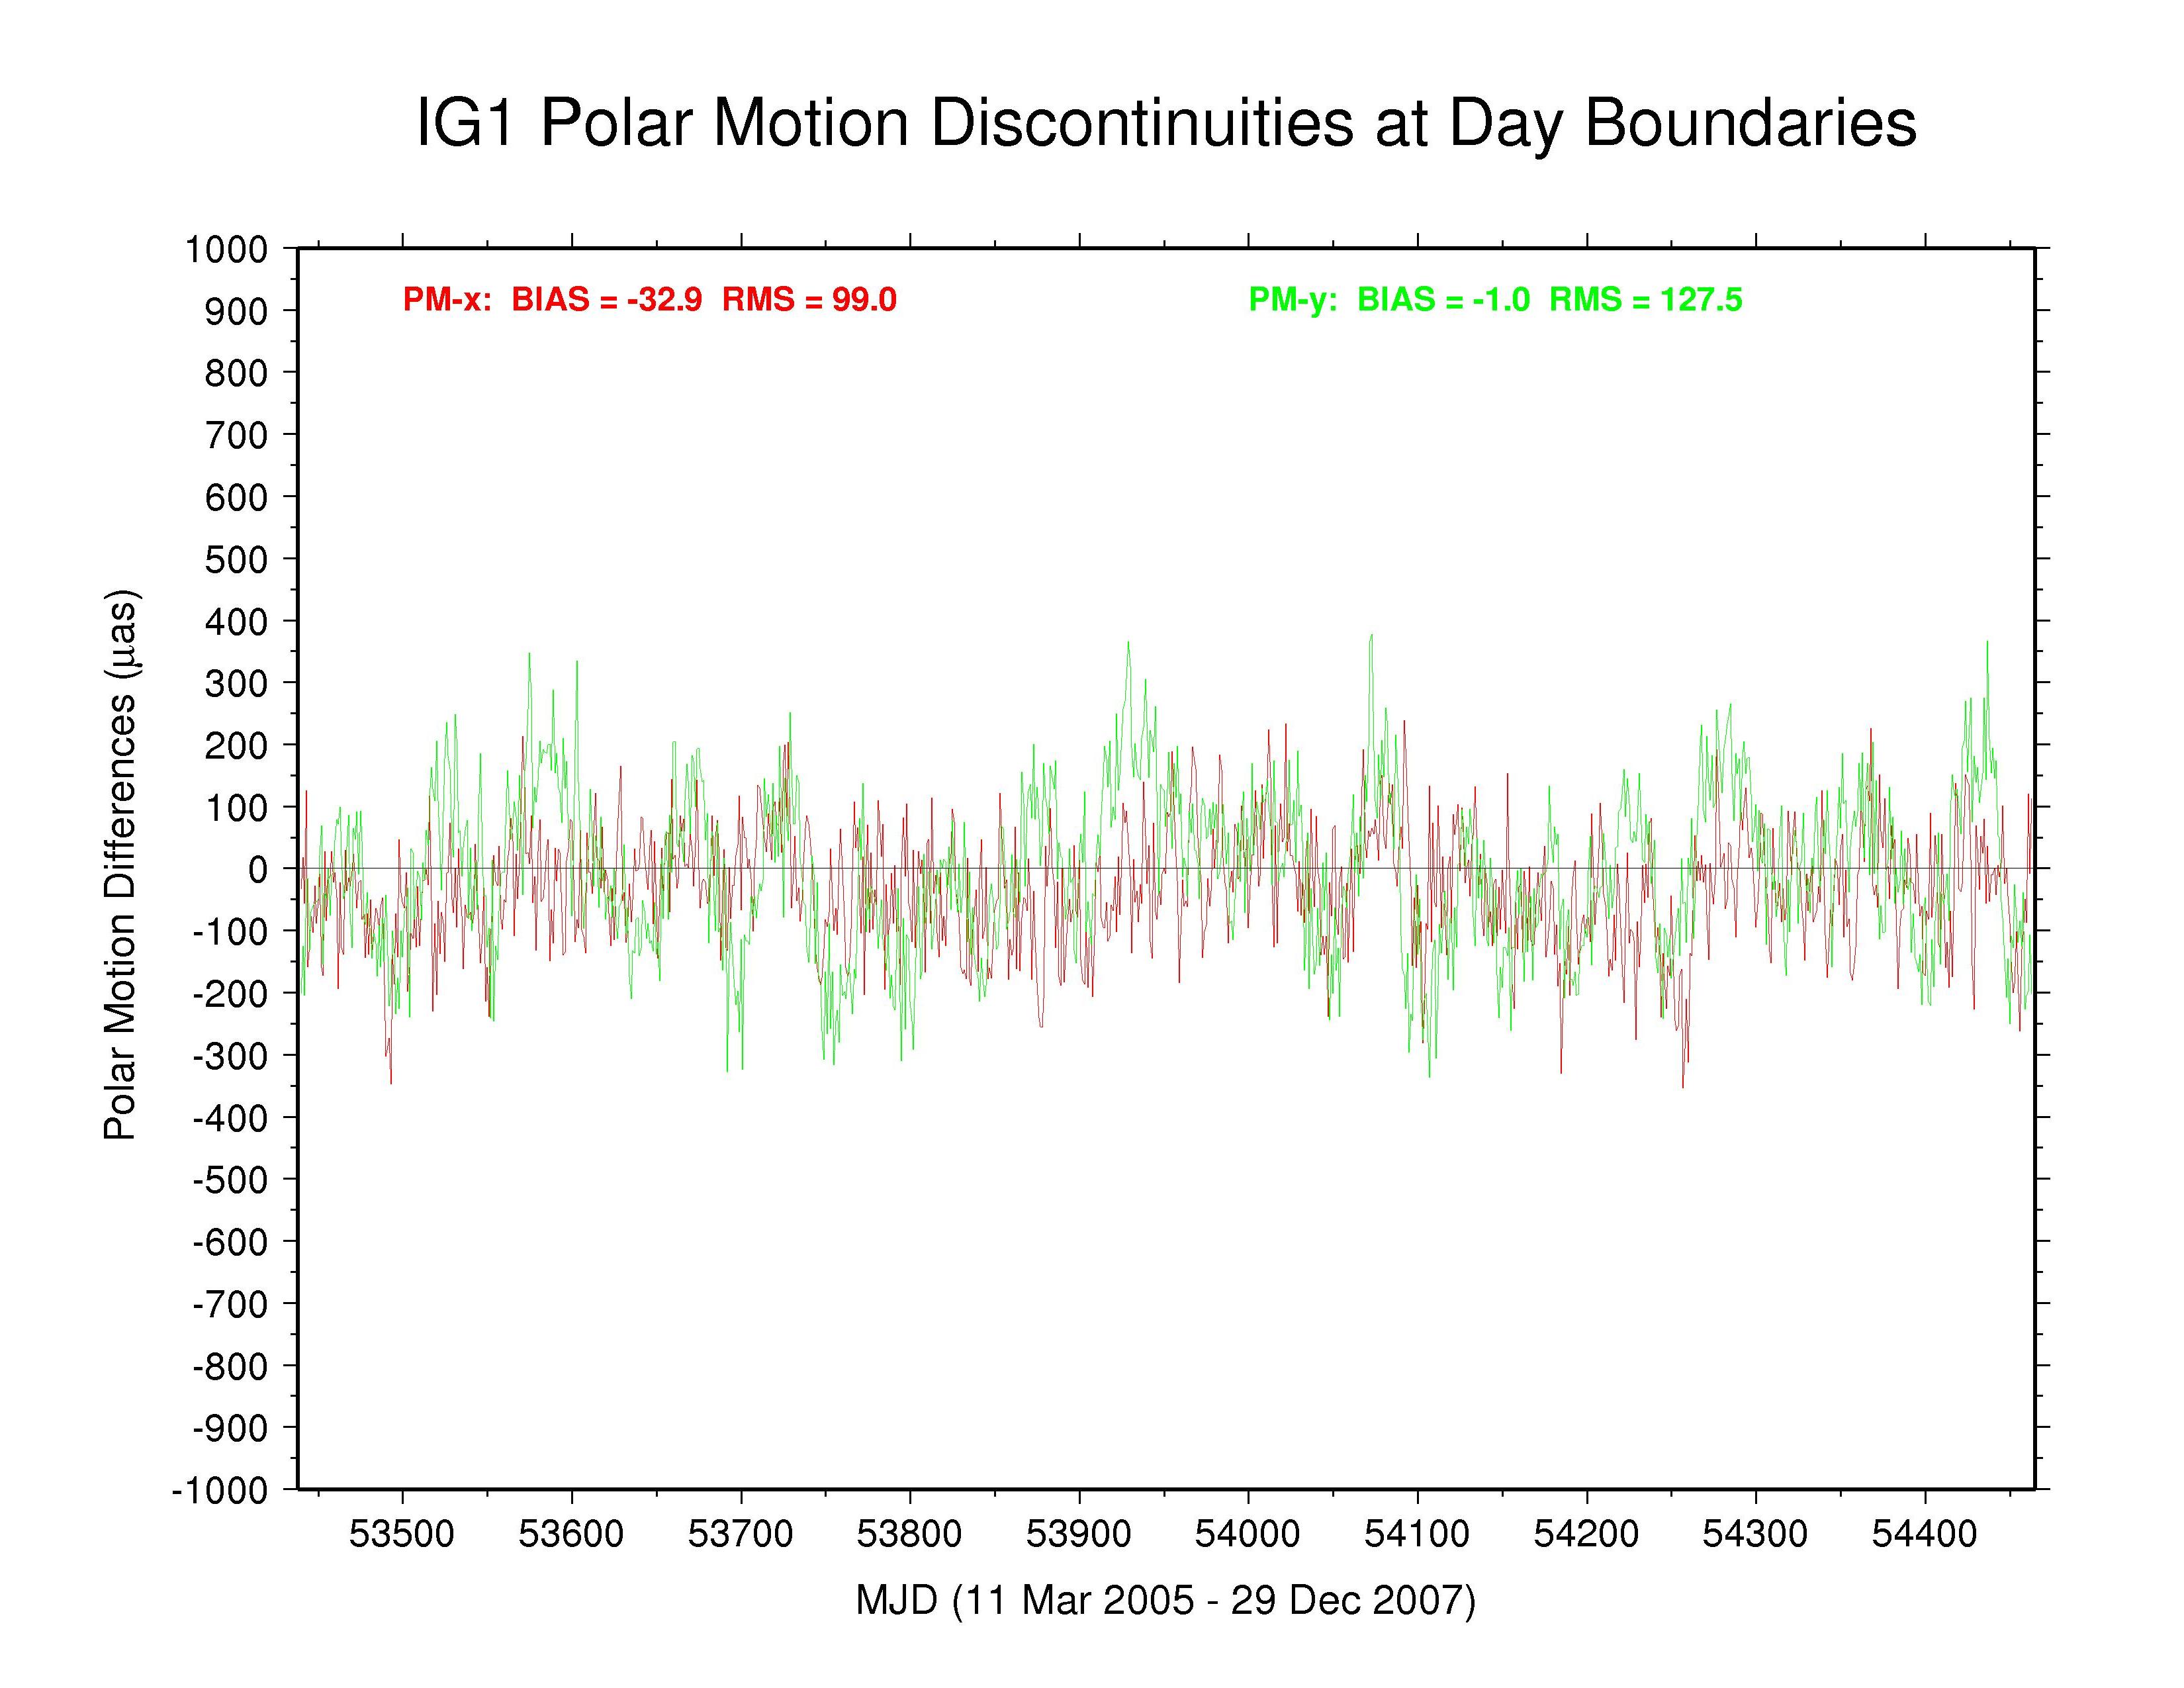 IGS polar motion discontinuitiesdiscontinuities